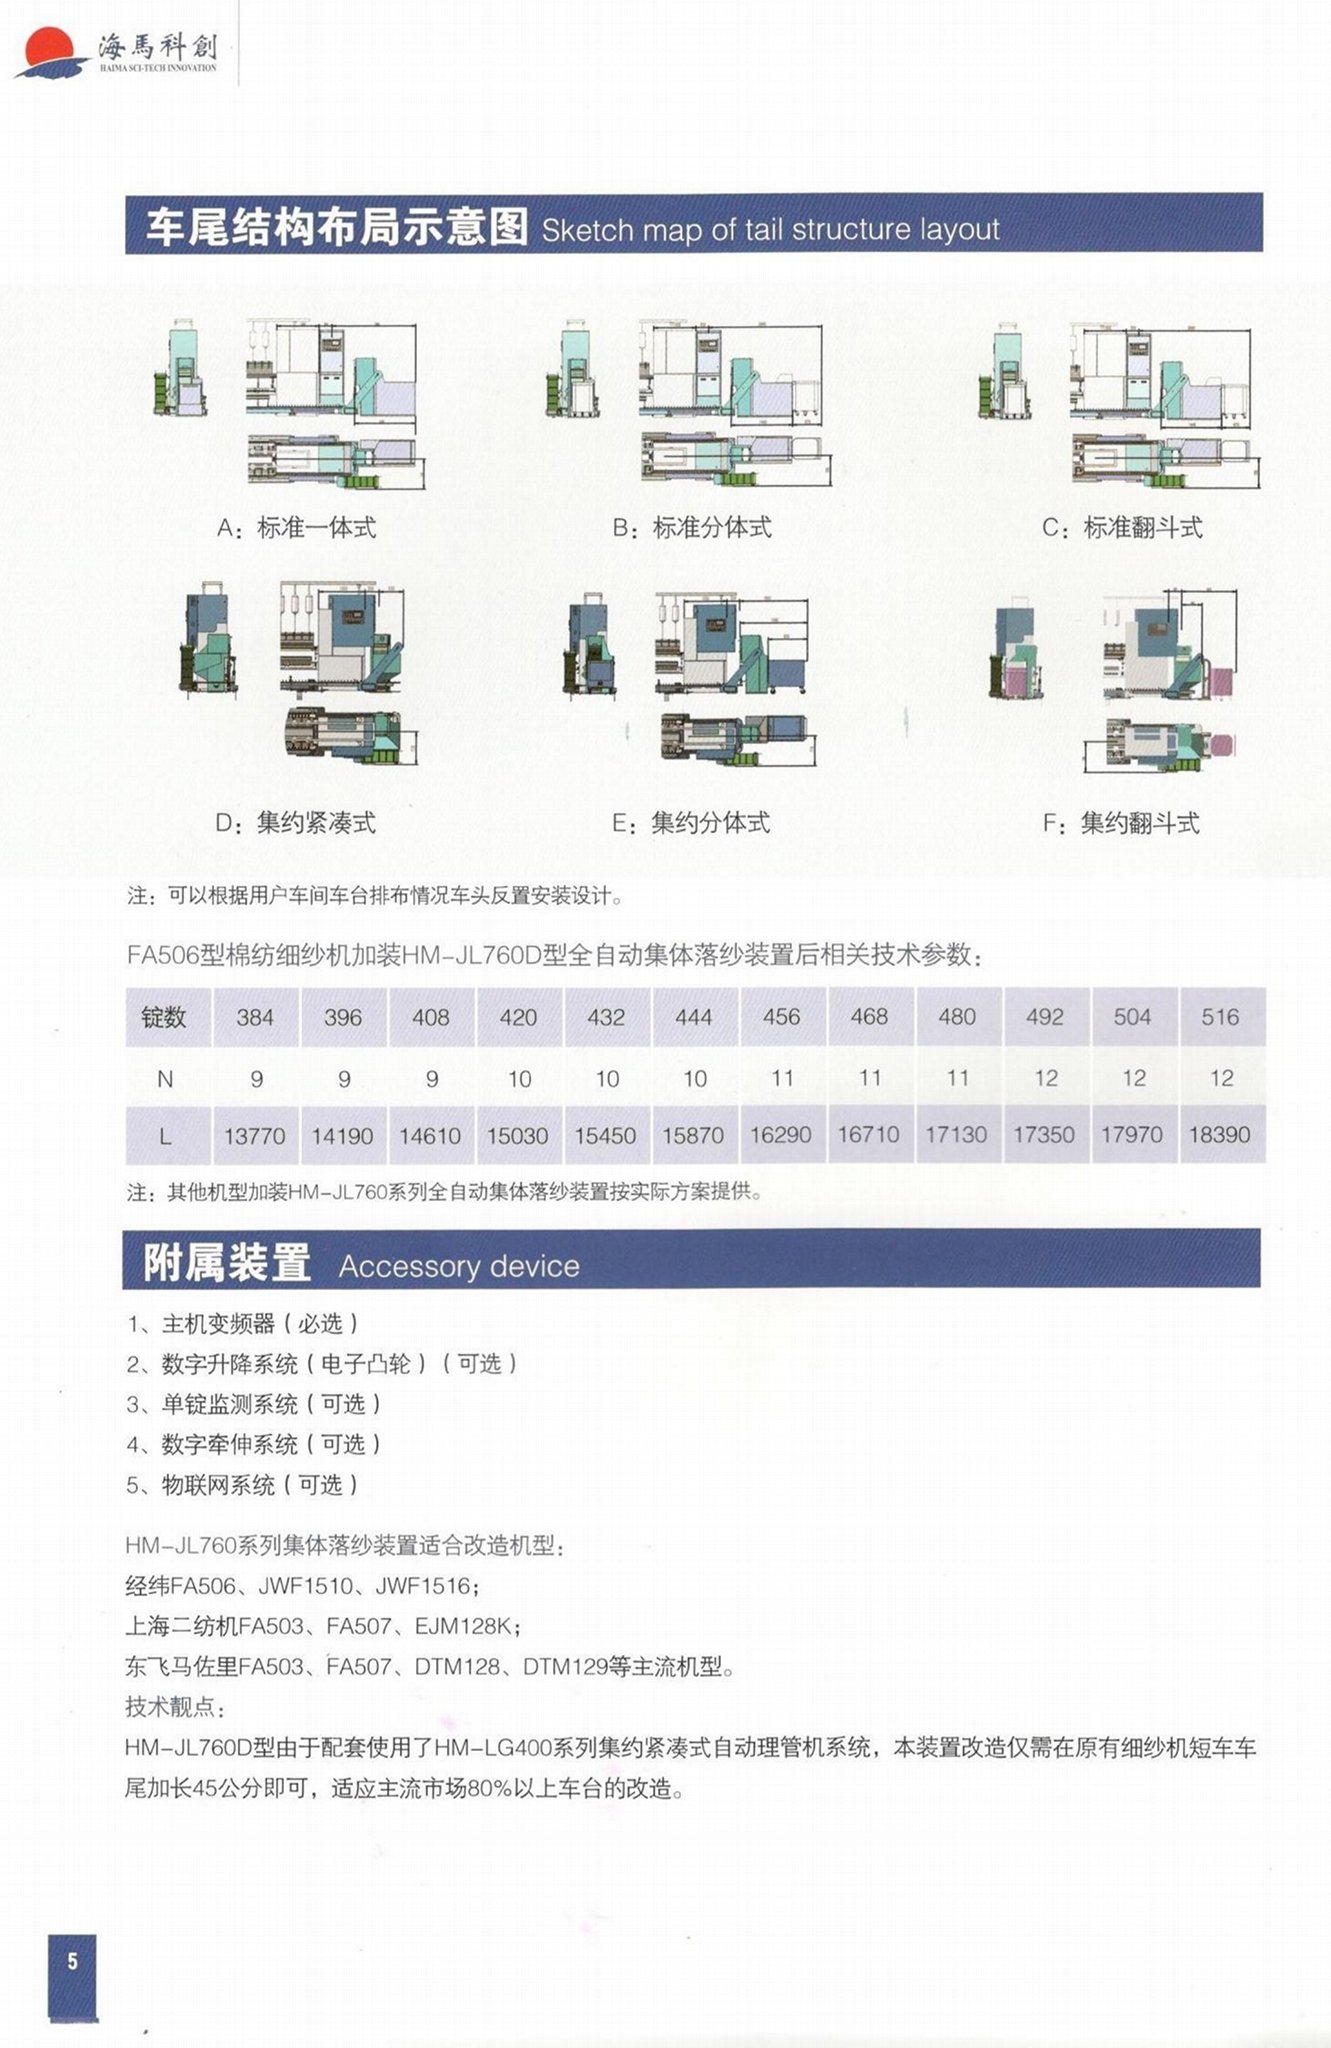 HM-JL760系列細紗機短車全自動集體落紗裝置 5